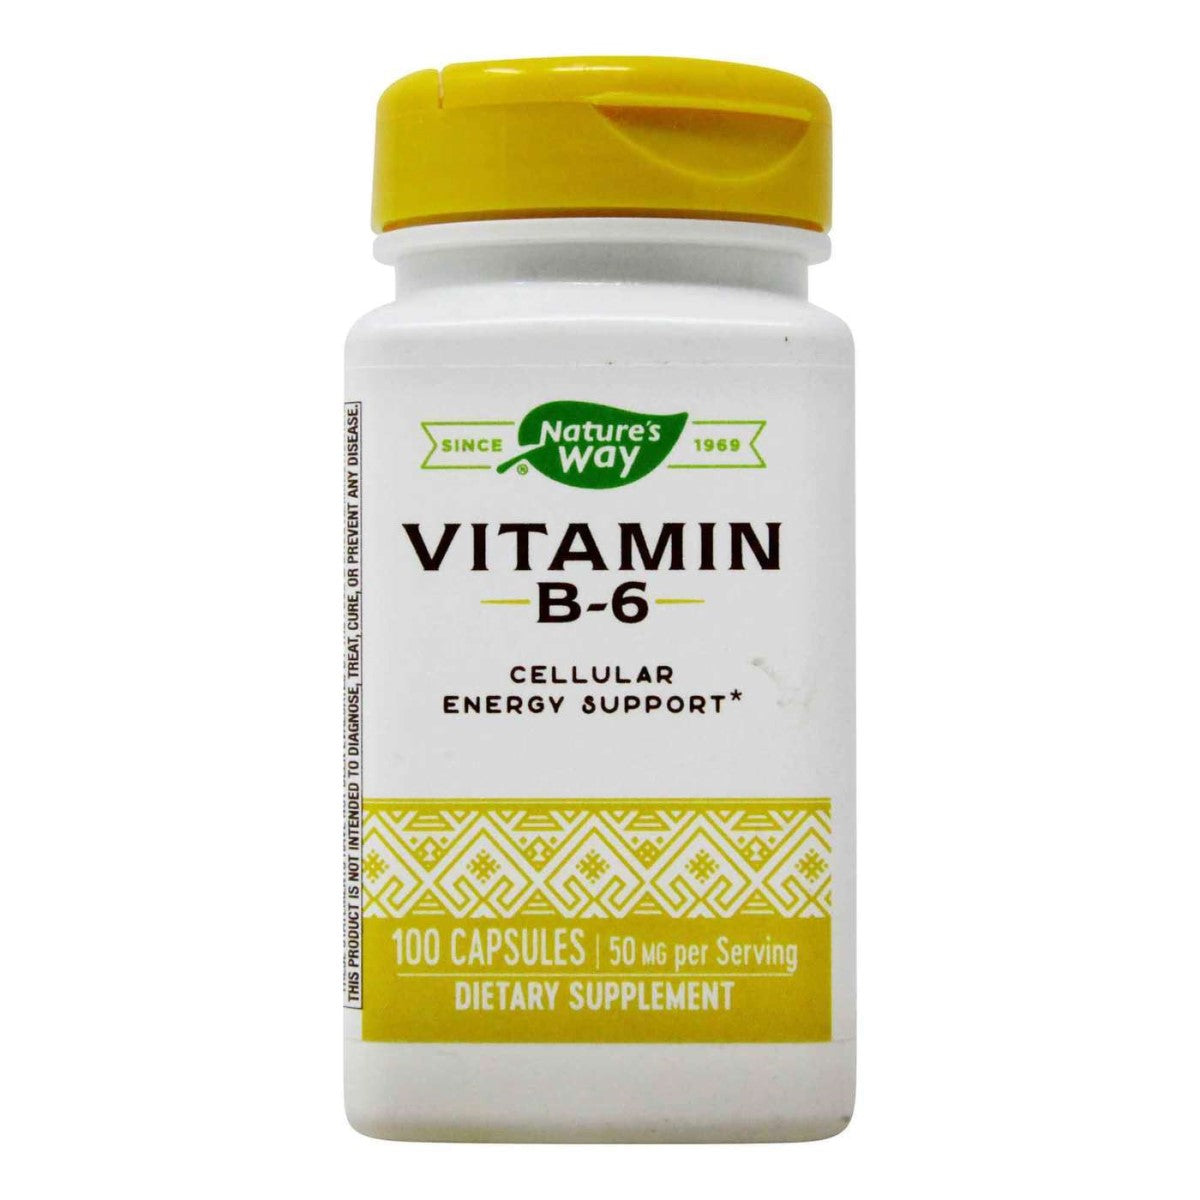 Primary image of Vitamin B-6